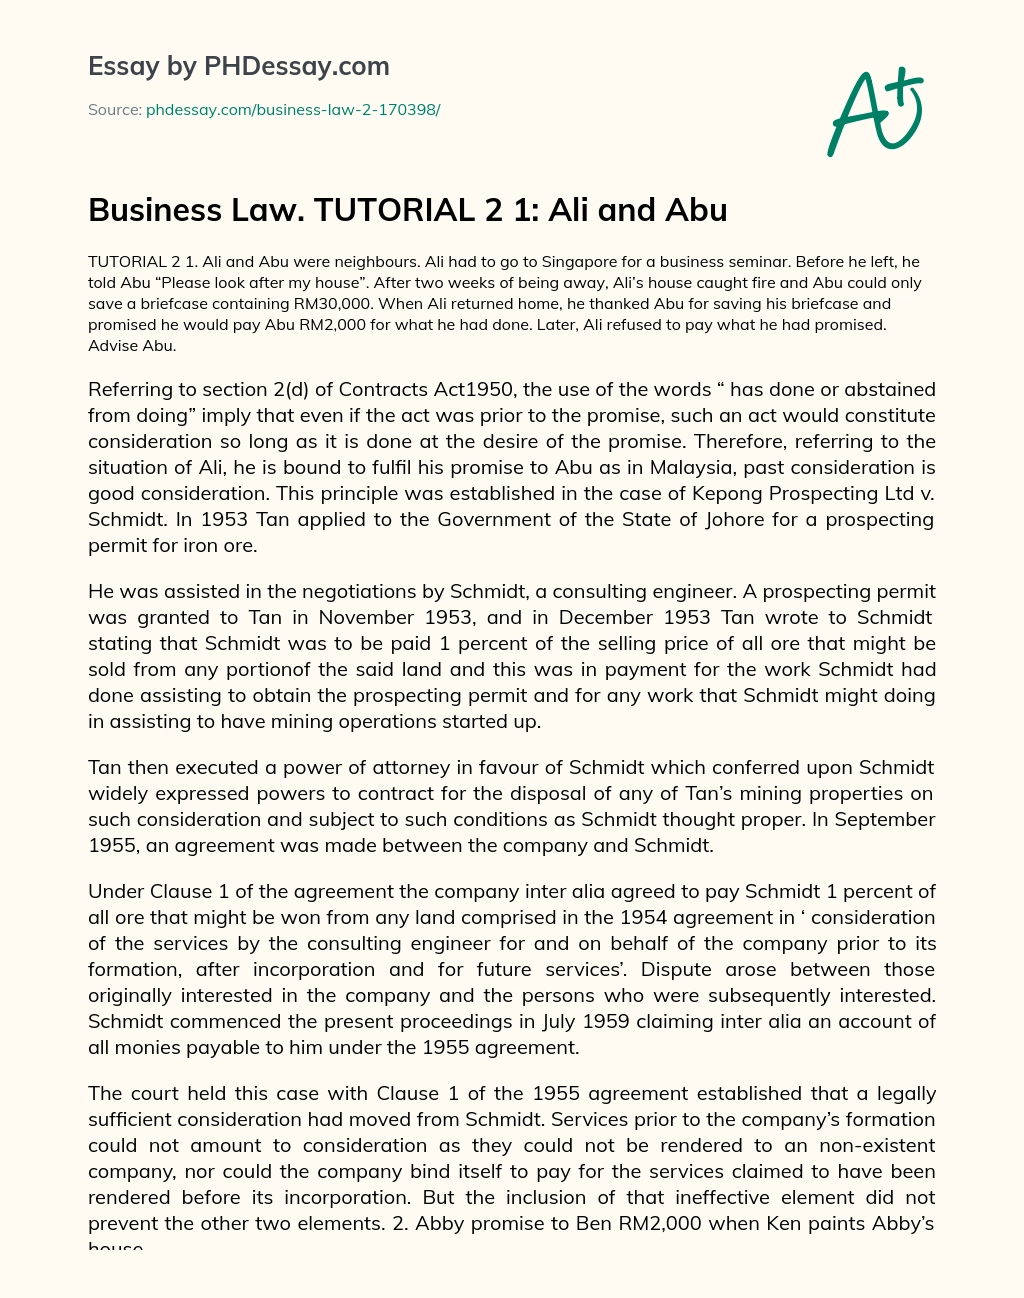 Business Law. TUTORIAL 2 1: Ali and Abu essay